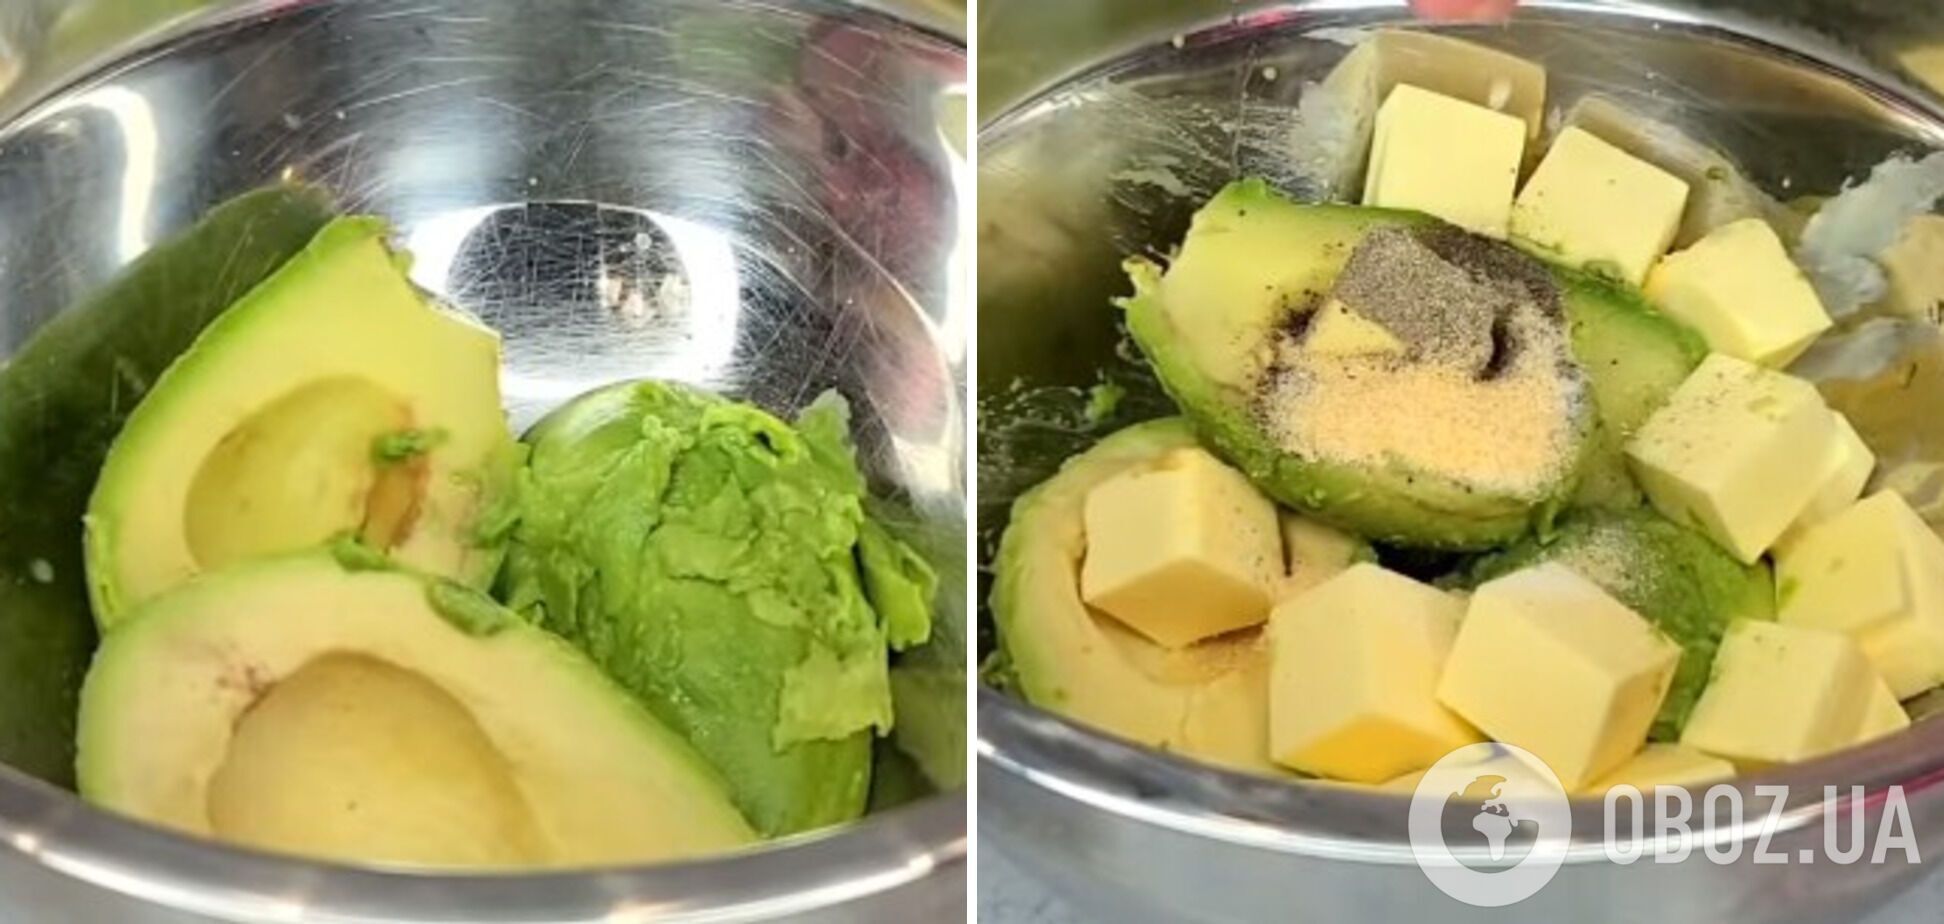 Нарезка авокадо для салата